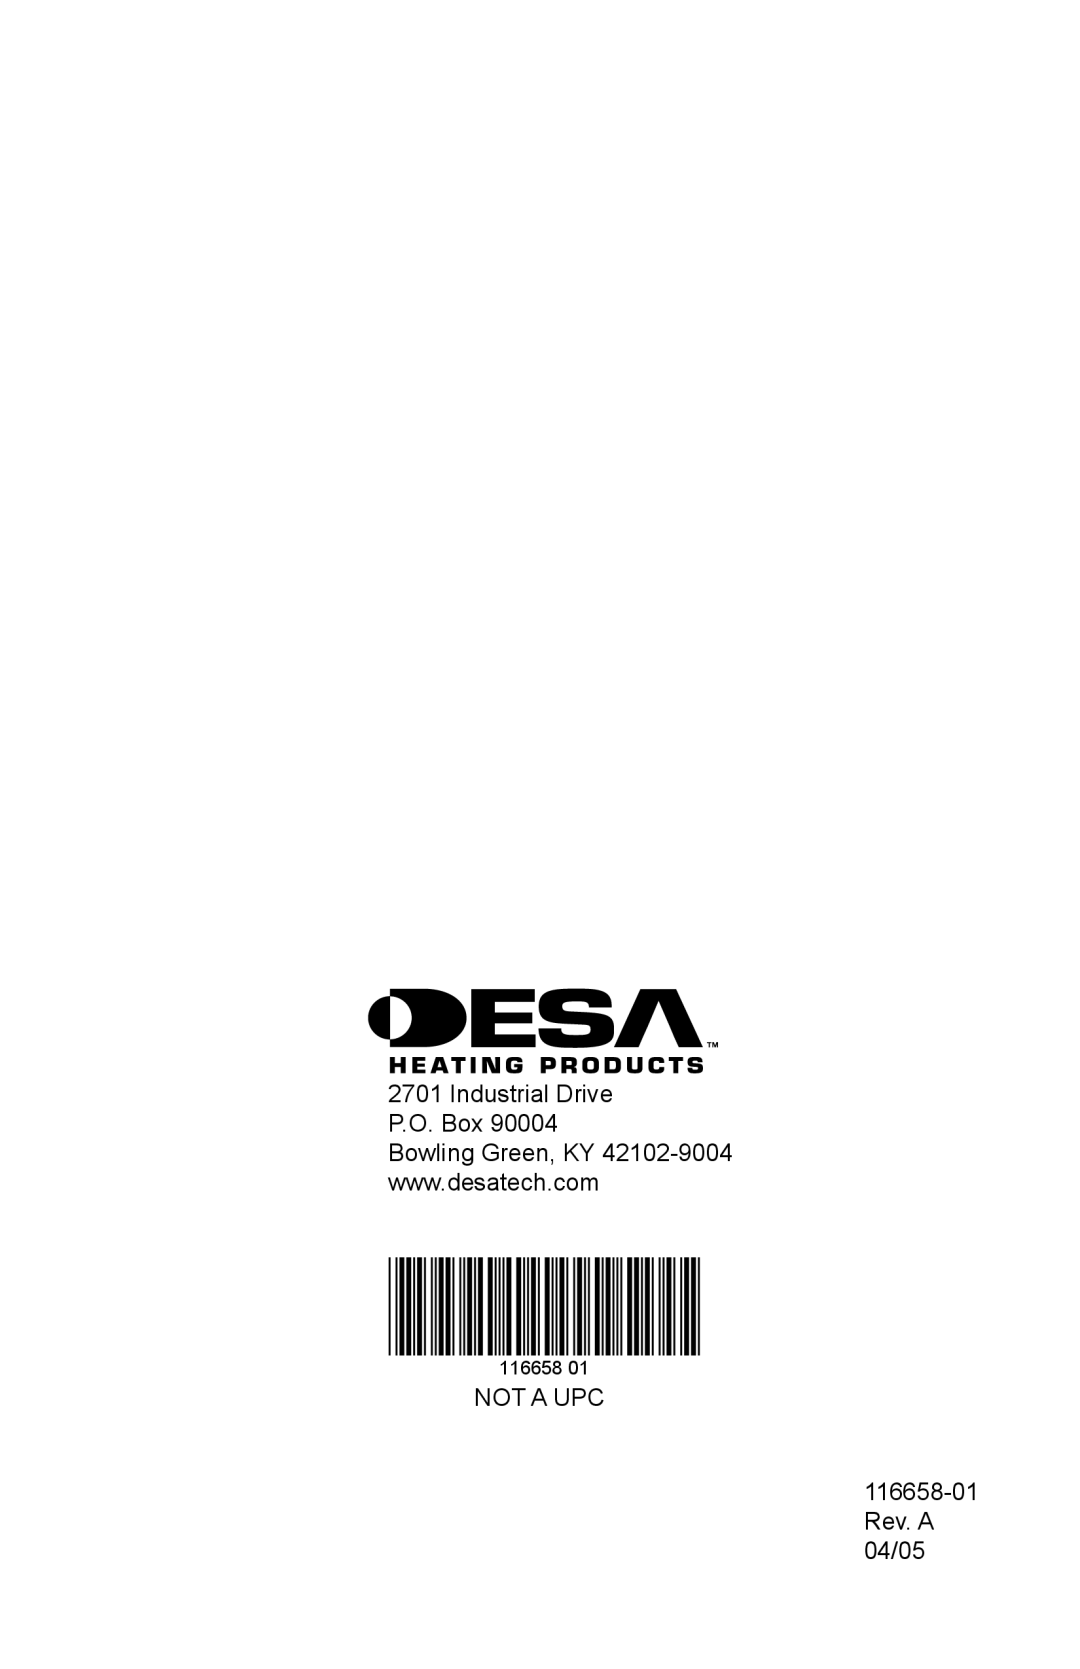 Desa CDCFNRA, CDCFPRA installation manual Industrial Drive P.O. Box, NOT A UPC 116658-01 Rev. A 04/05 